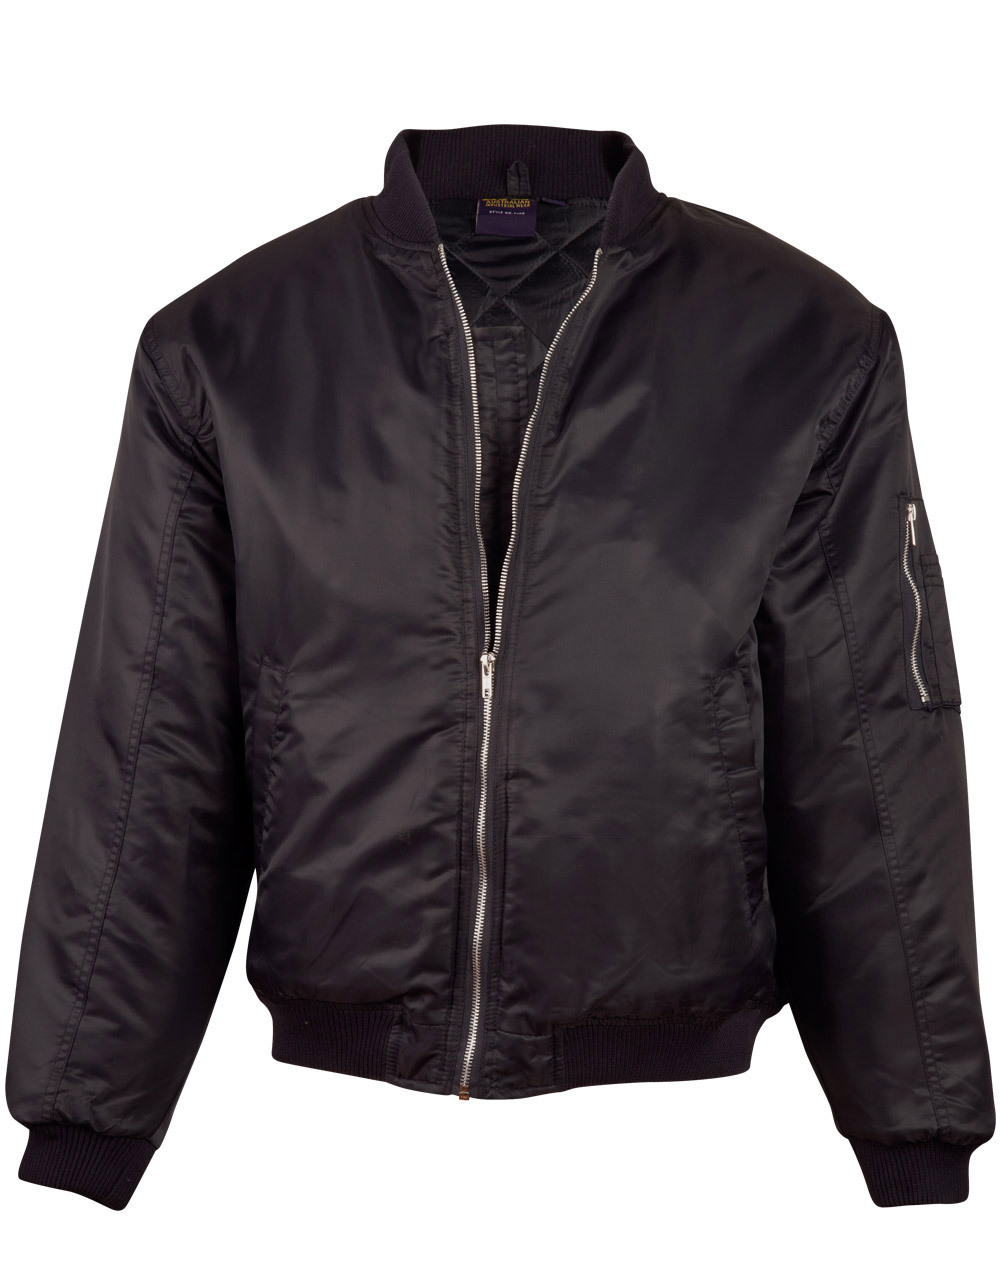 AIW FJ02; Flying Jacket 100% Nylon/Polyester Quilt lined | eBay